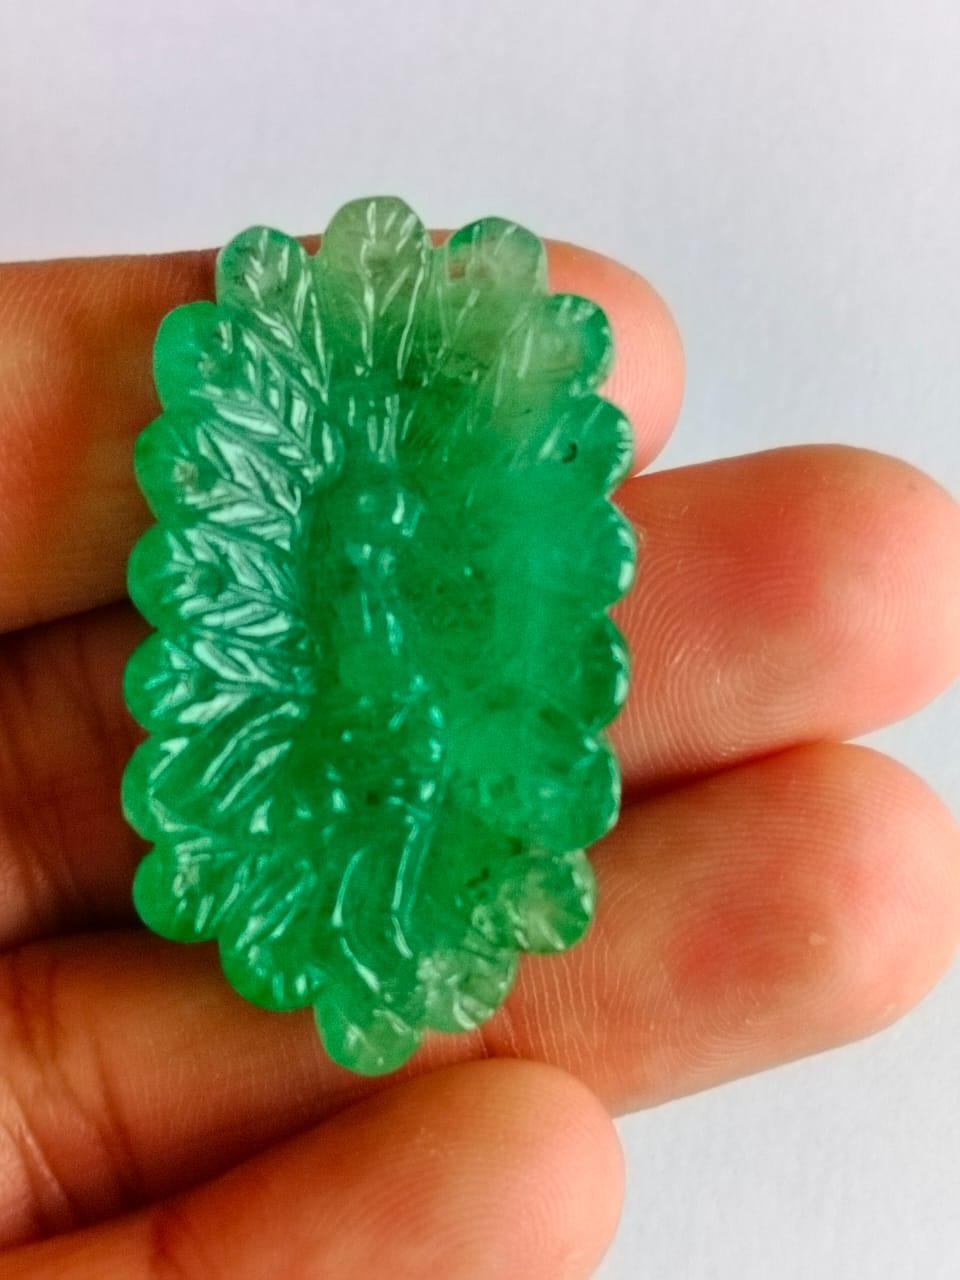 Uncut 59.41 Carat Zambian Natural Emerald Hand Carving Peacock Loose Gemstone For Sale